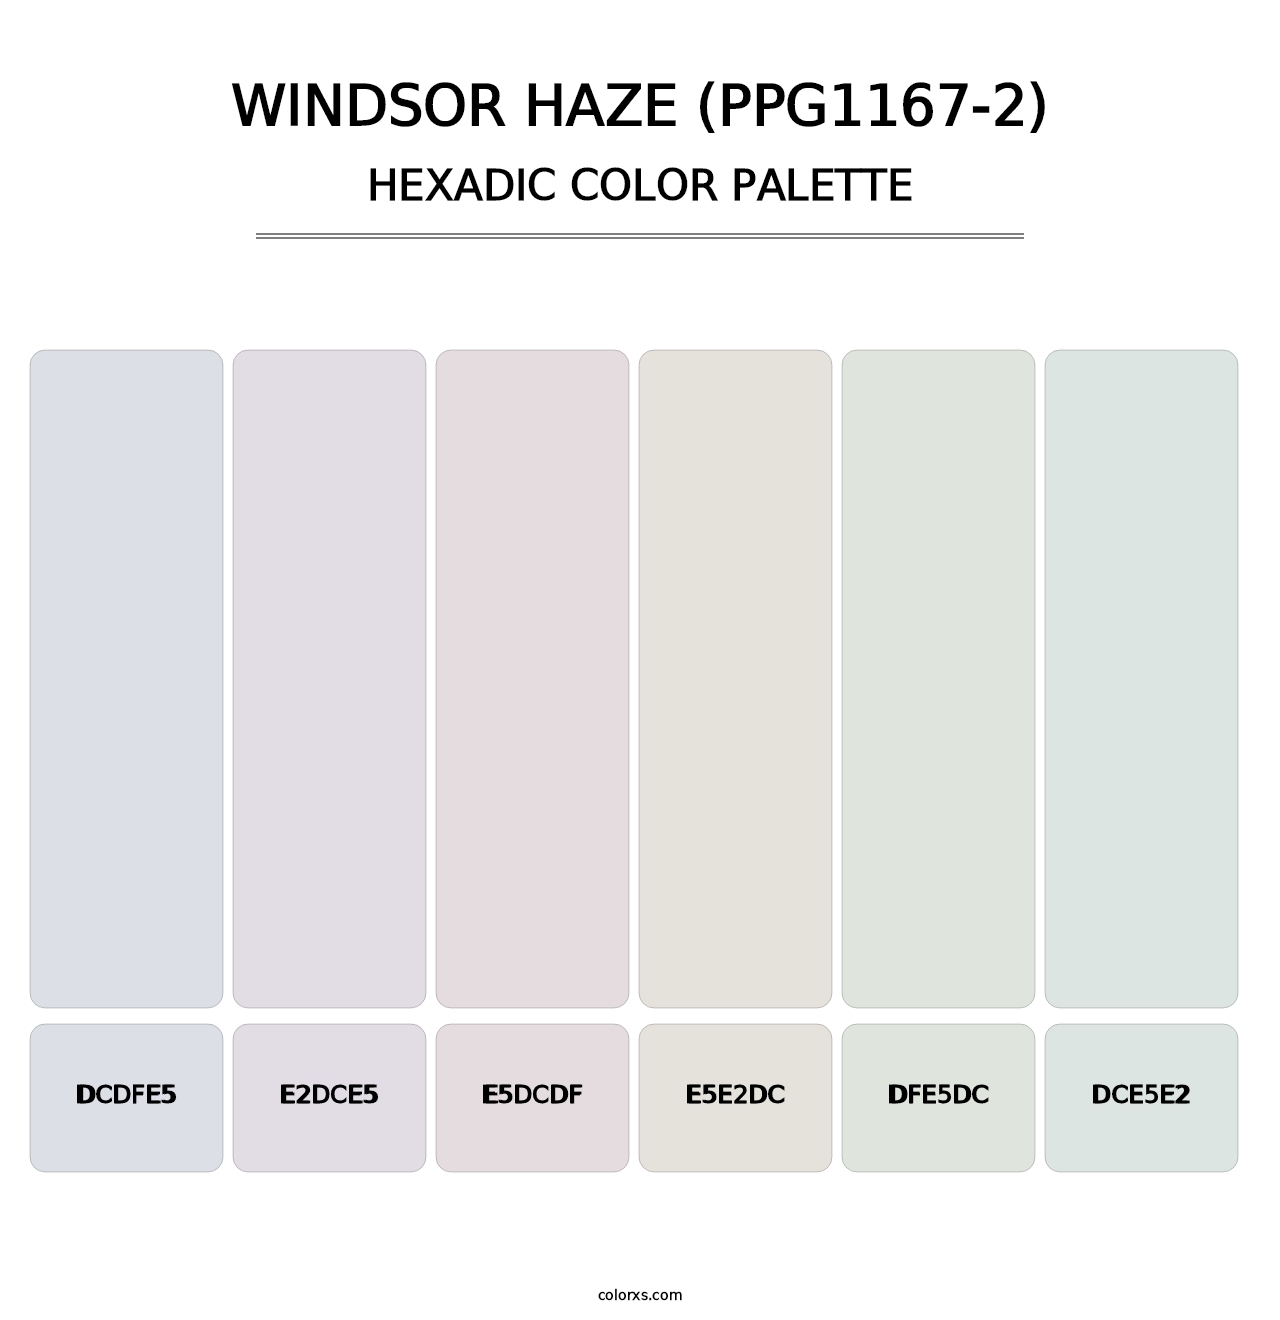 Windsor Haze (PPG1167-2) - Hexadic Color Palette